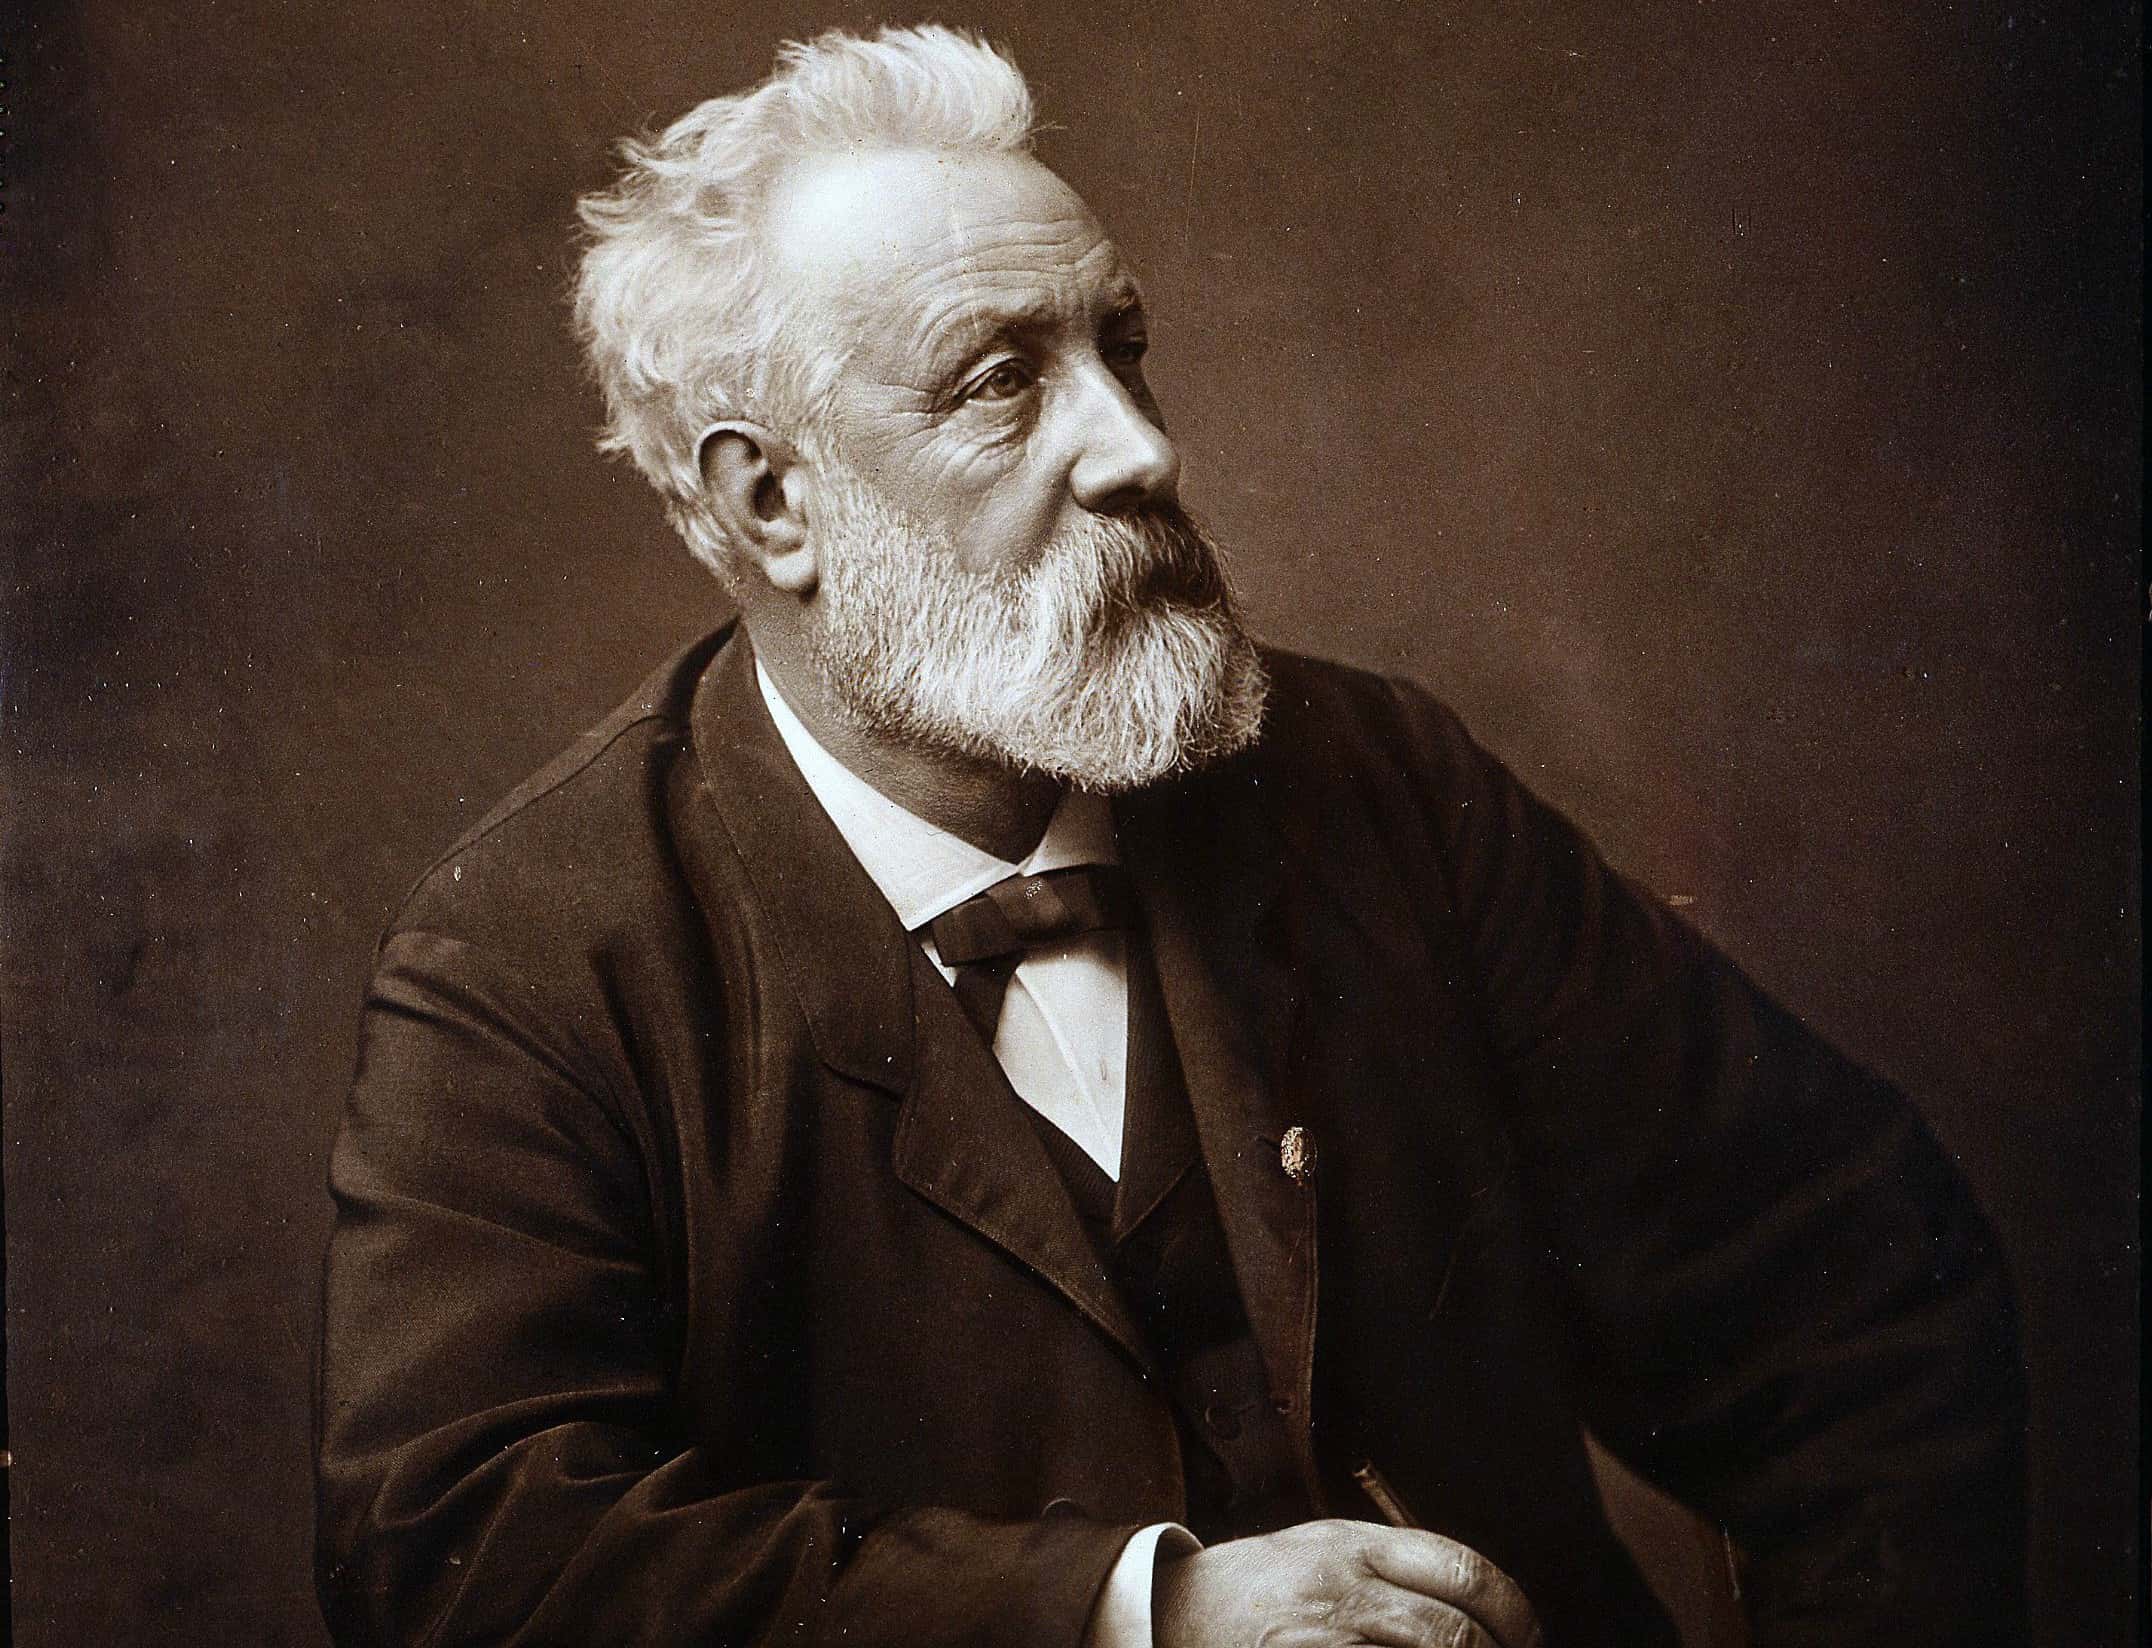 Jules Verne Facts